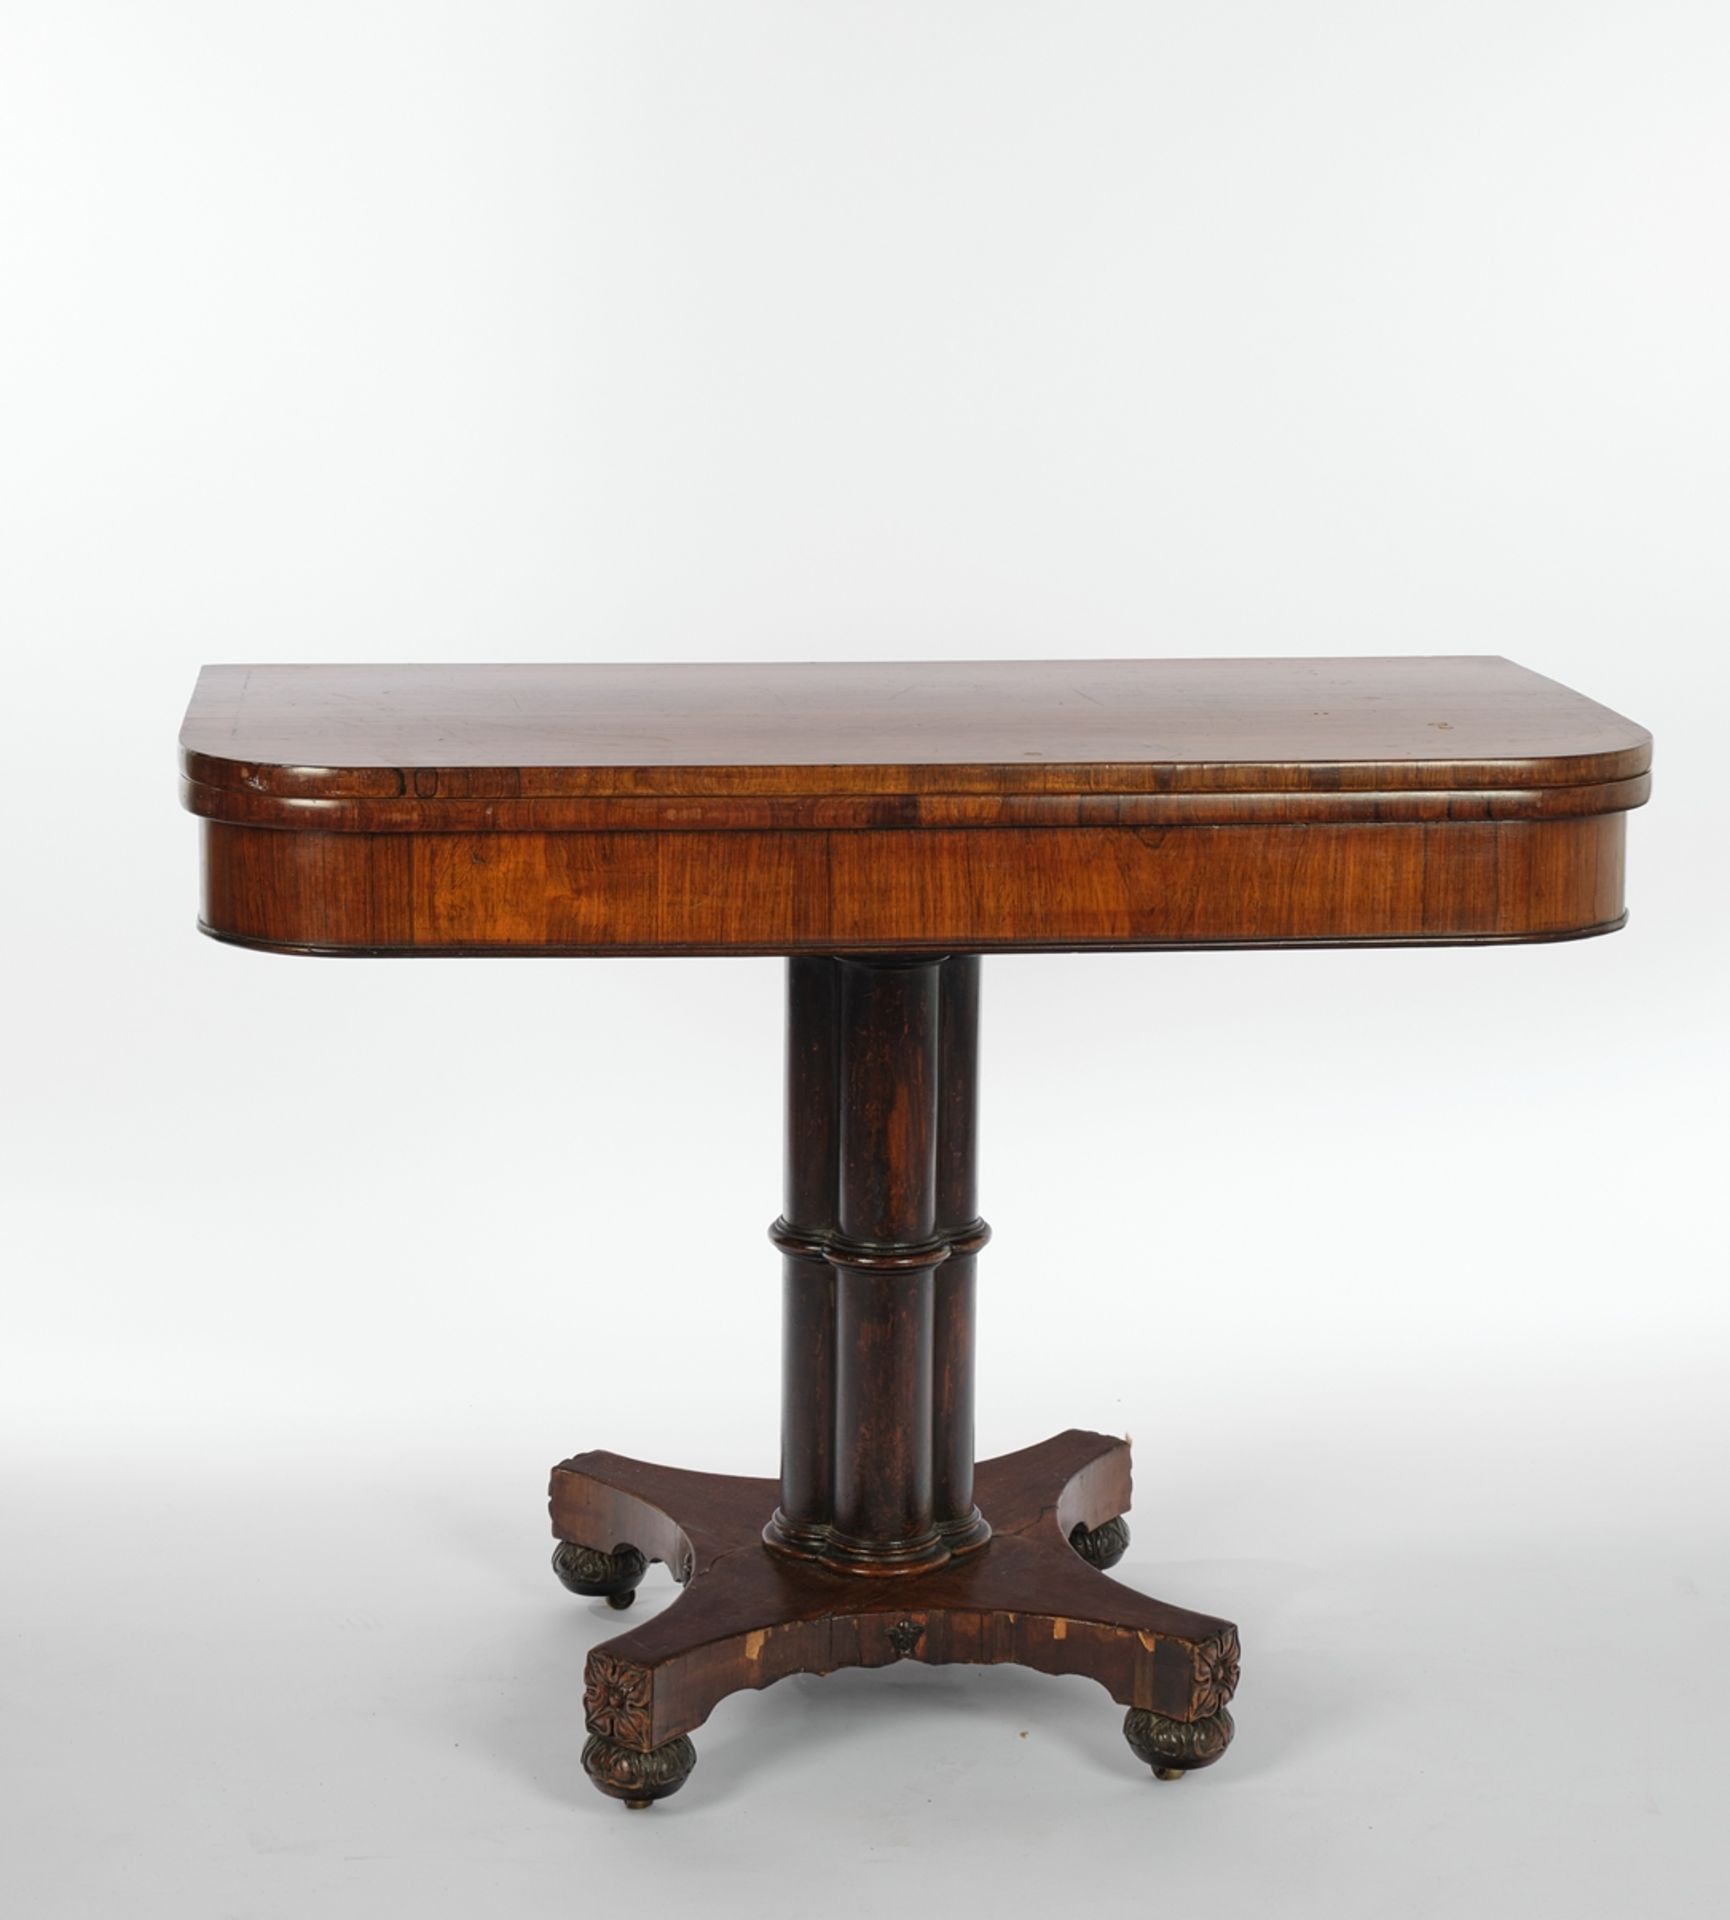 Spieltisch / Konsoltisch, Biedermeier, um 1830, Mahagoni furniert, Fadeneinlagen, rechteckige Platt - Bild 2 aus 4